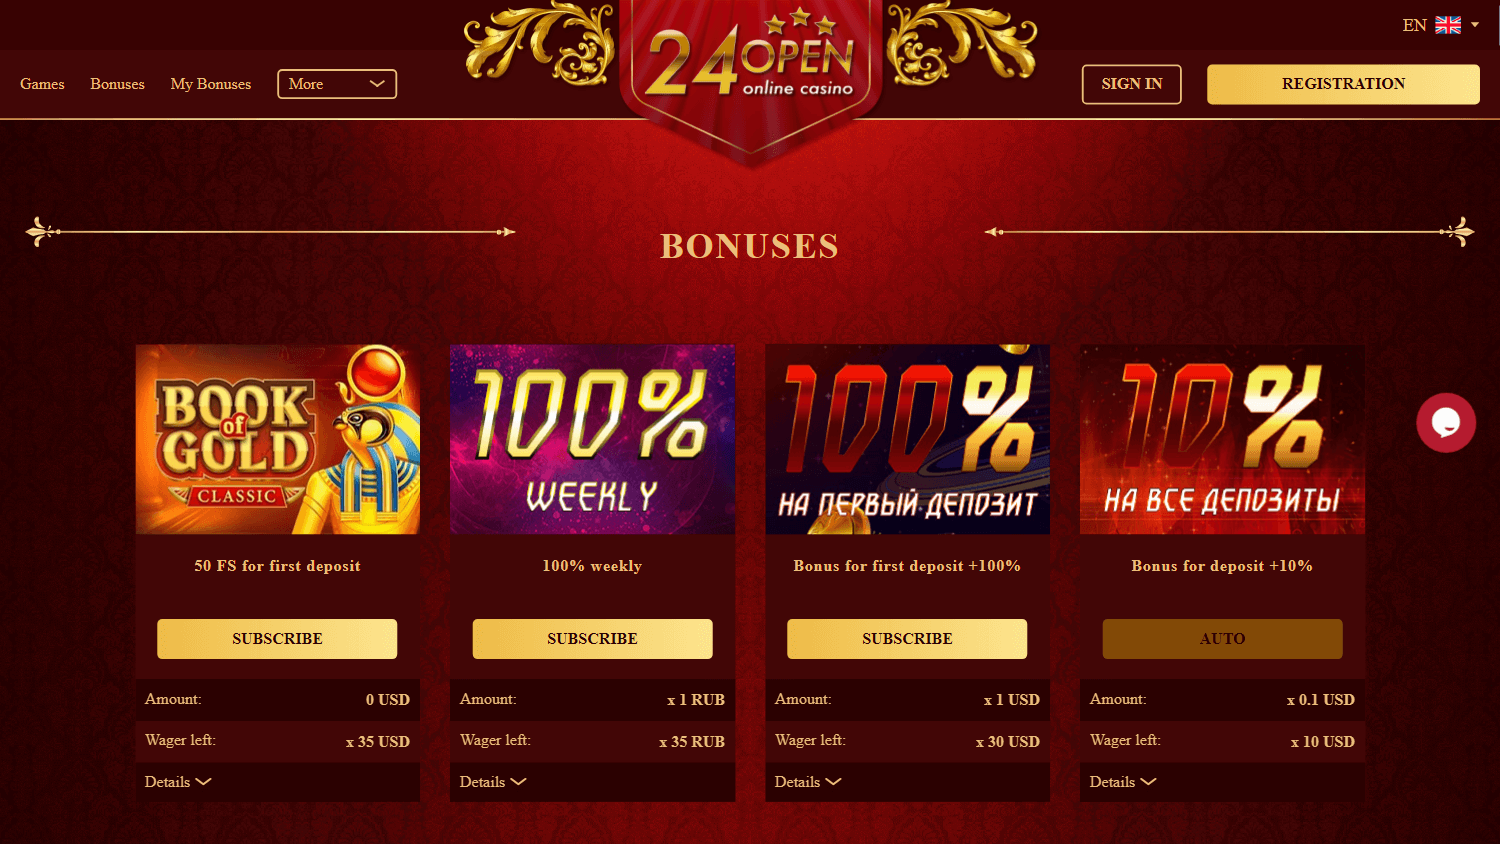 24open_casino_promotions_desktop